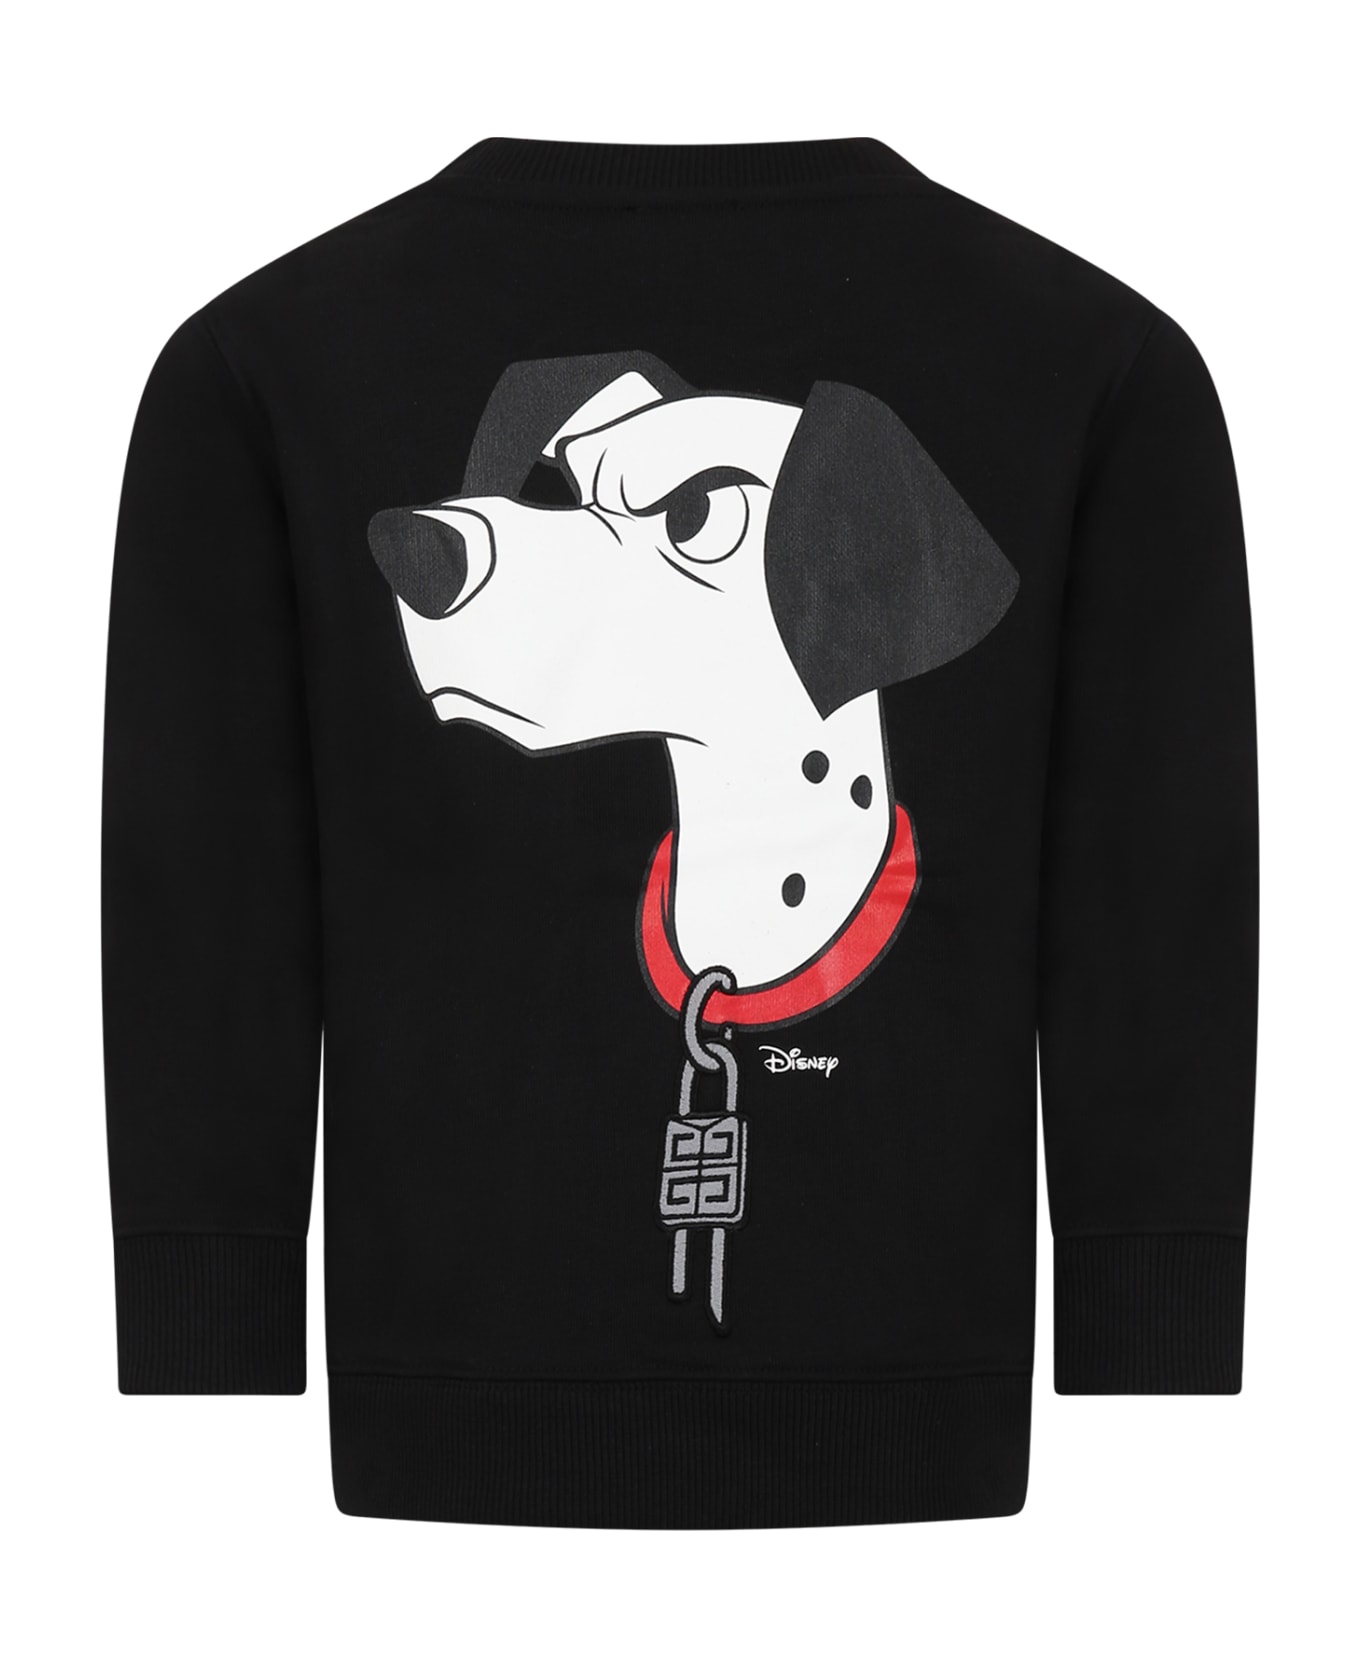 Givenchy Balck Sweatshirt For Kids With 101 Dalmatians Print And Logo - Black